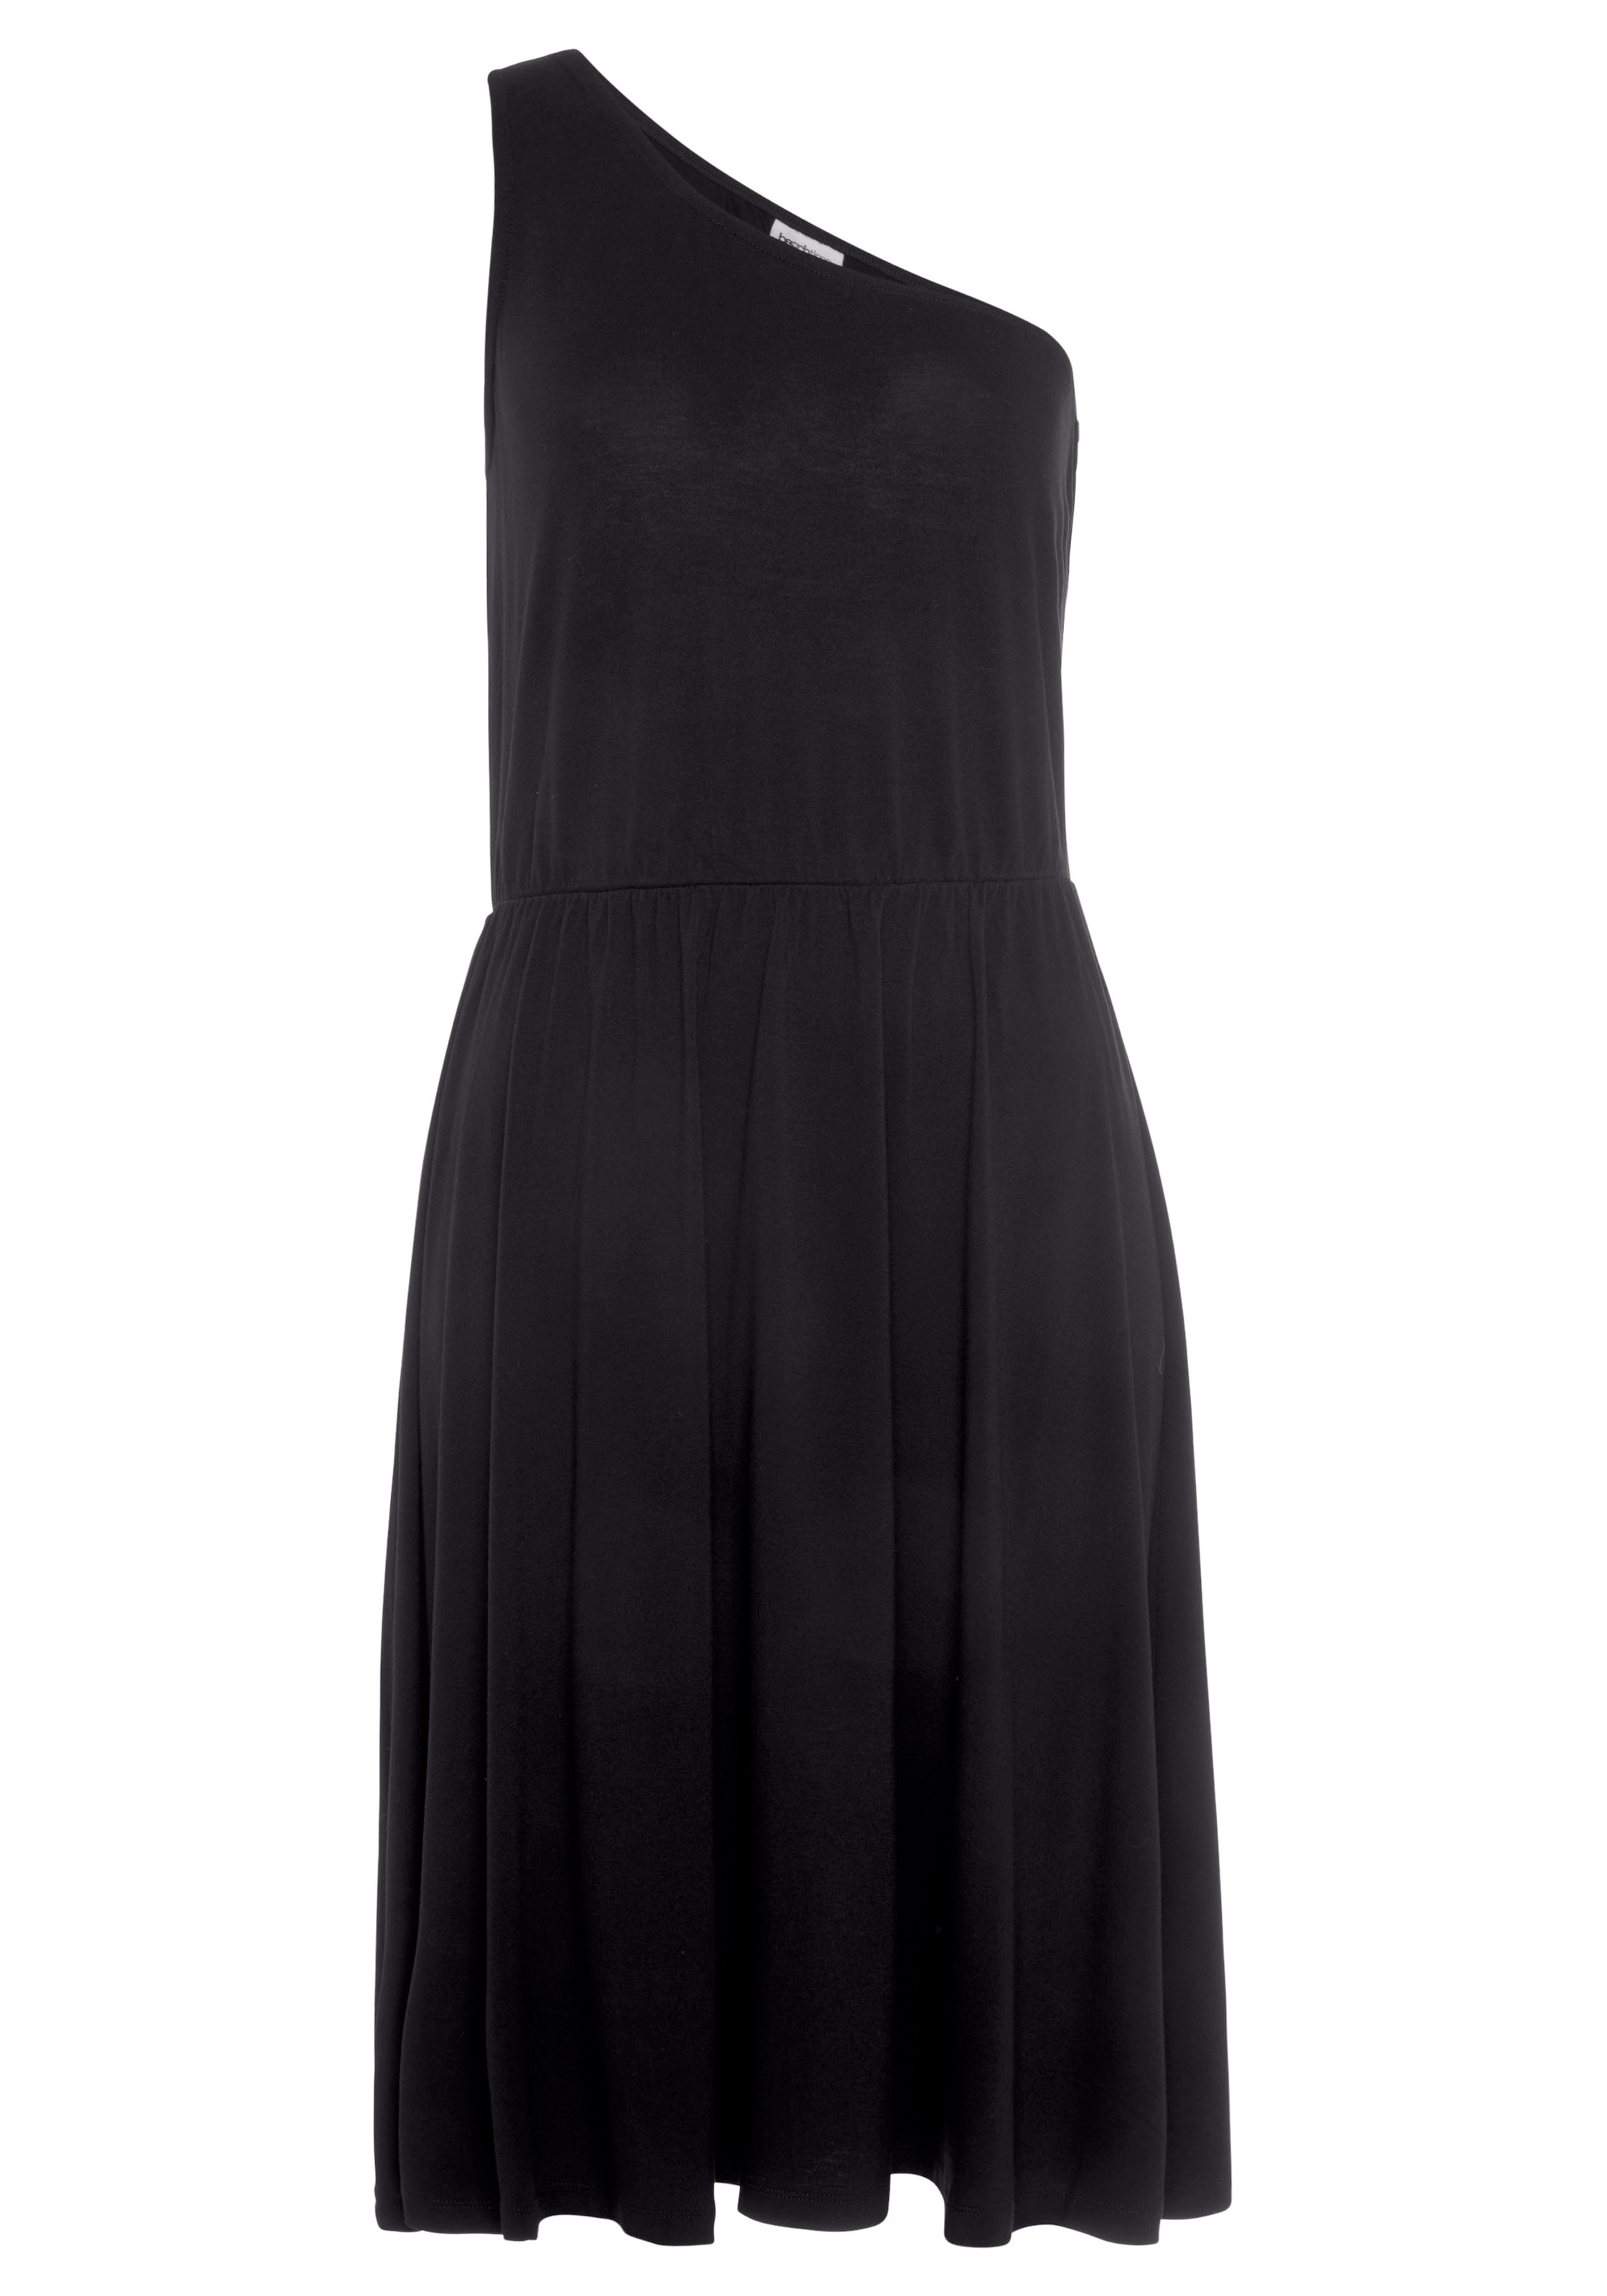 Shop Online LASCANA One-Shoulder-Kleid im OTTO